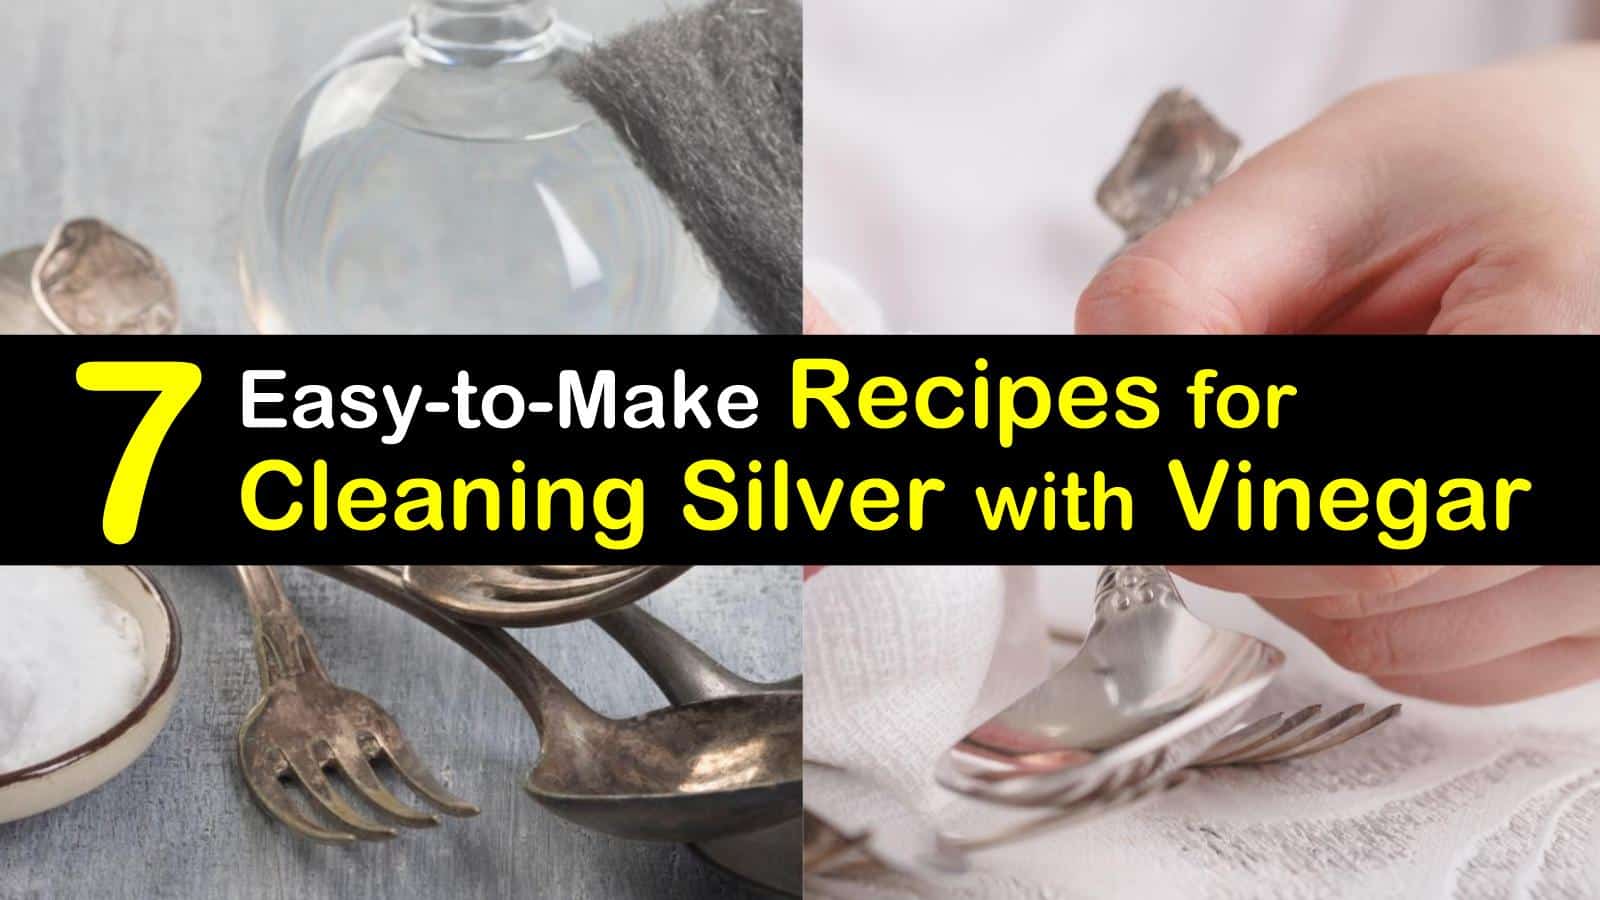 Clean Silver with Vinegar